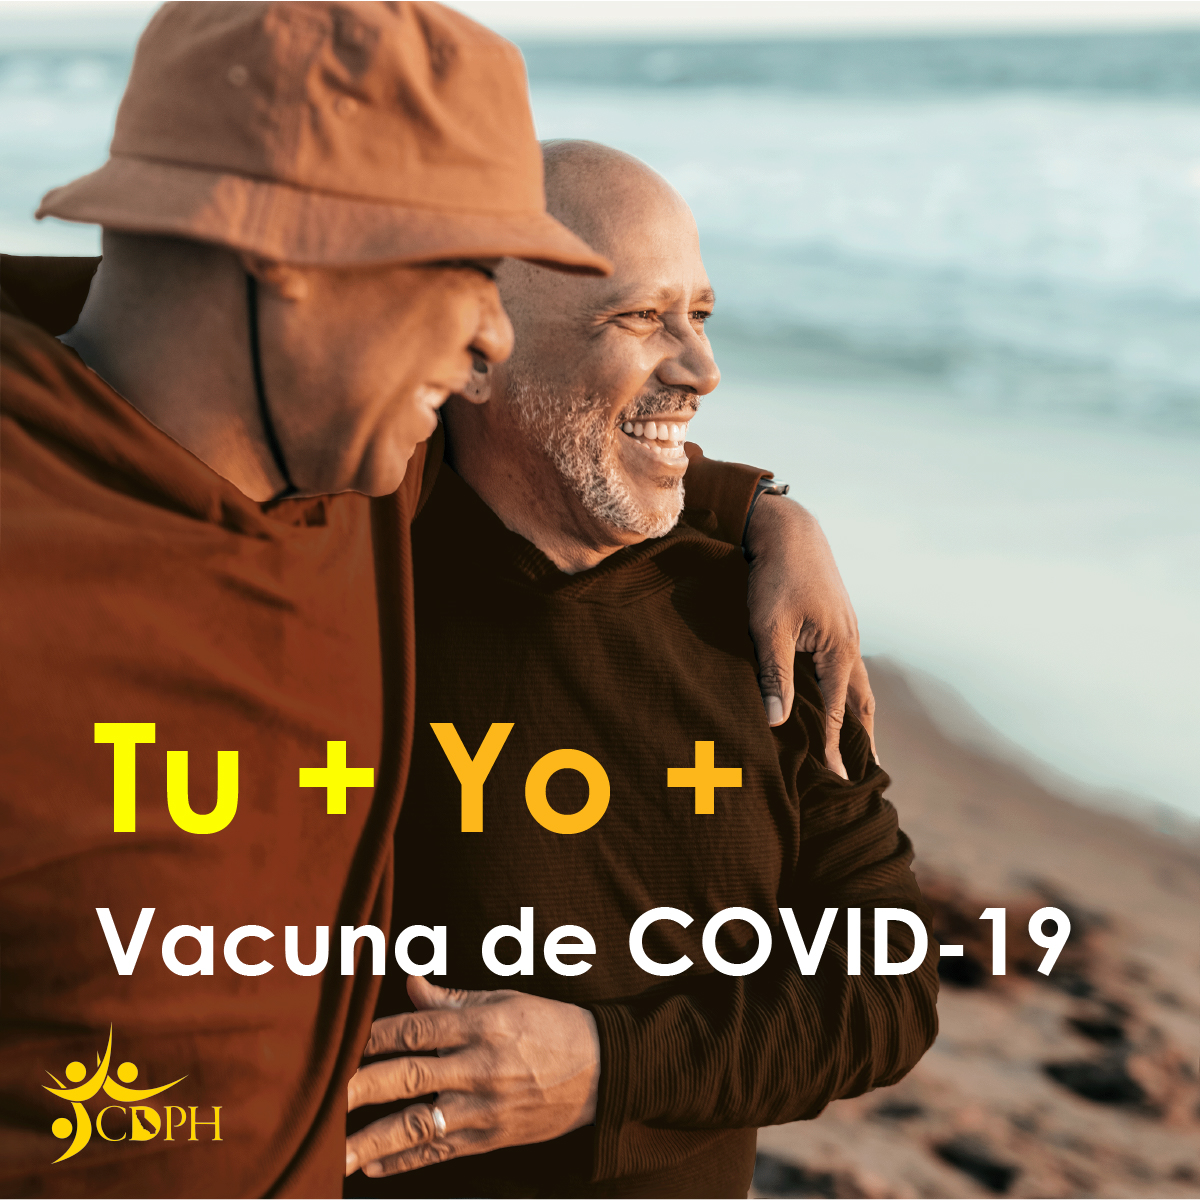 Tu + Yo + Vacuna de COVID-19